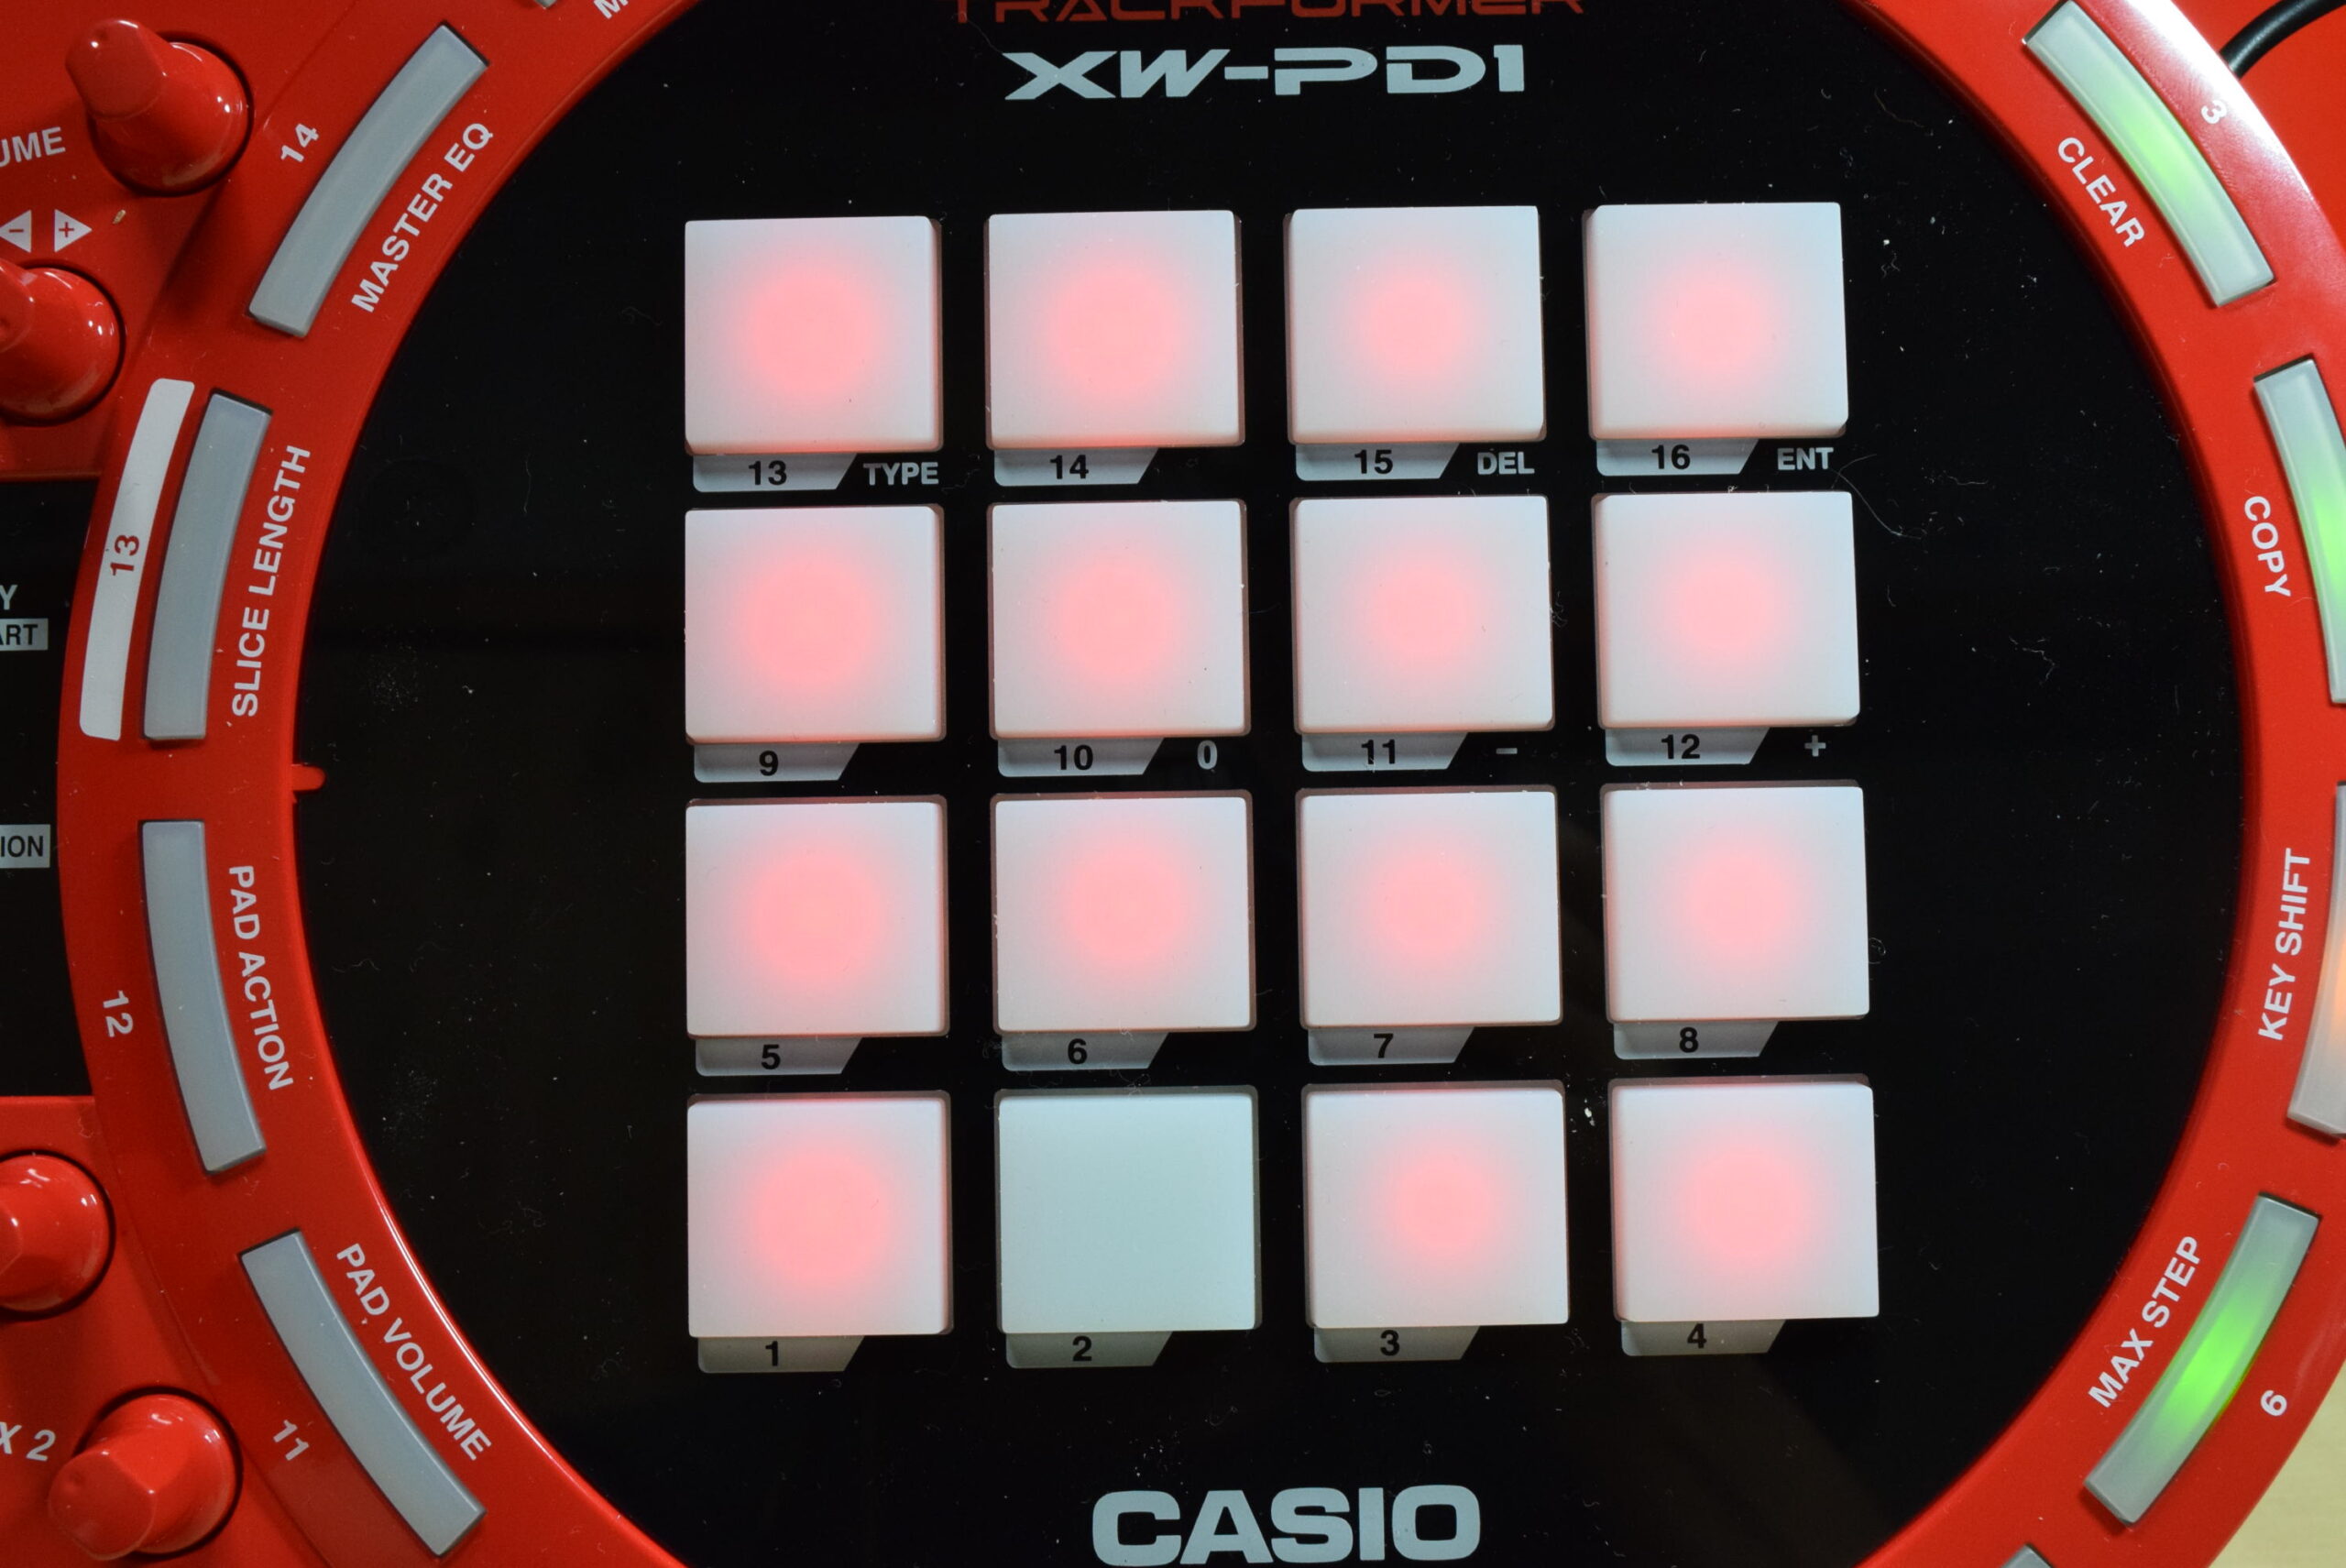 CASIOのTRACKFORMER XW-PD1は超高機能な楽器だった | DTMステーション